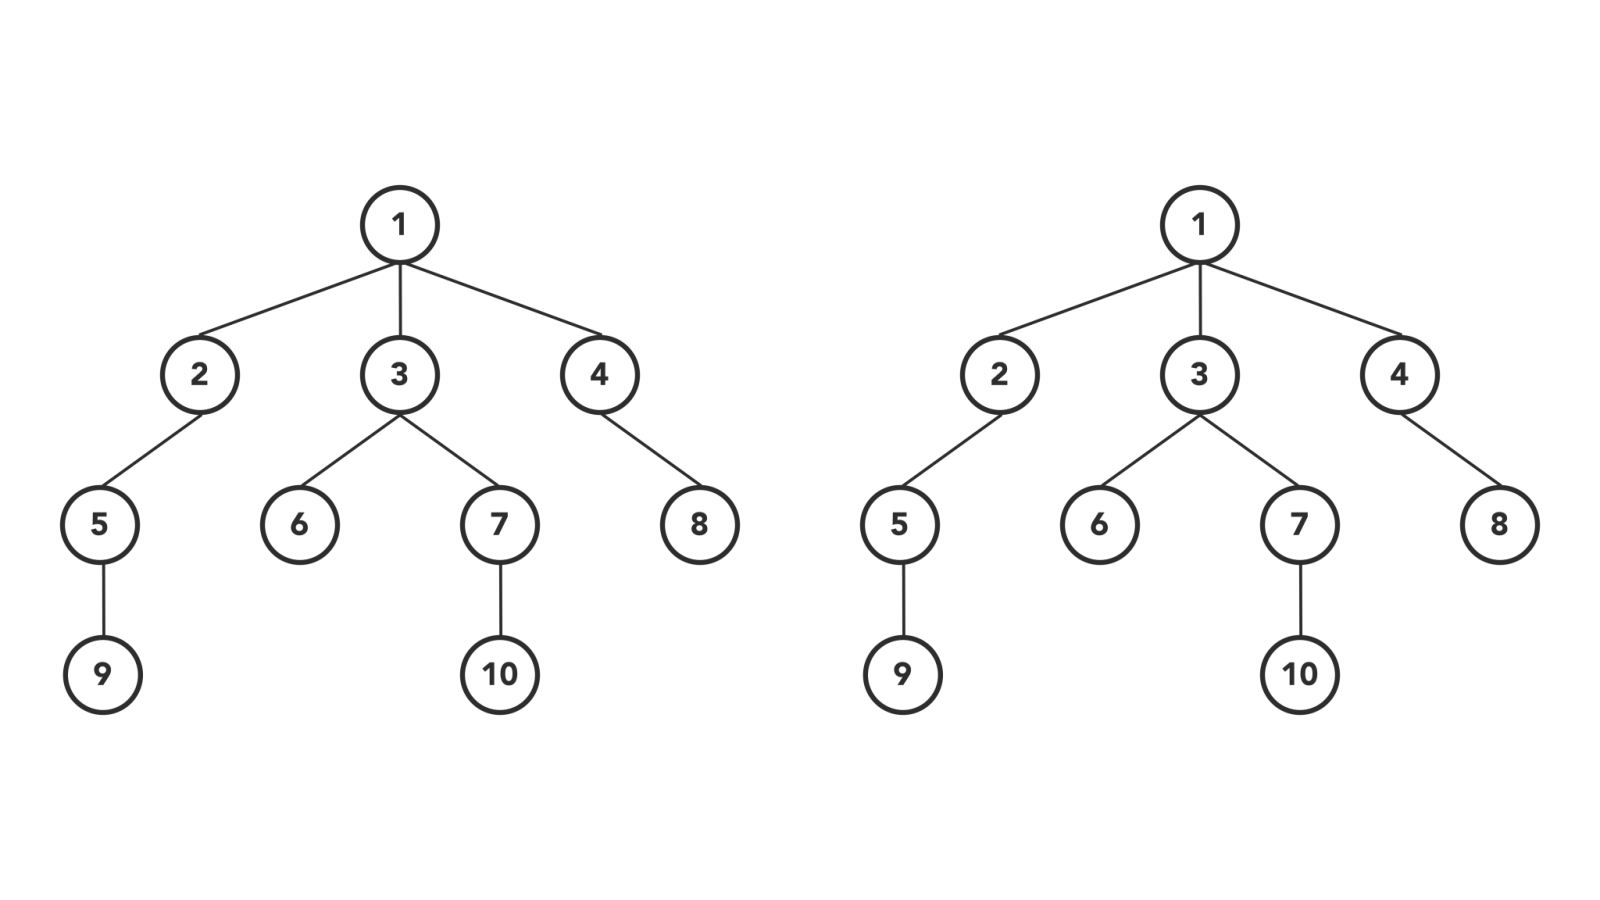 Depth first traversal of Binary Trees in Javascript - DEV Community